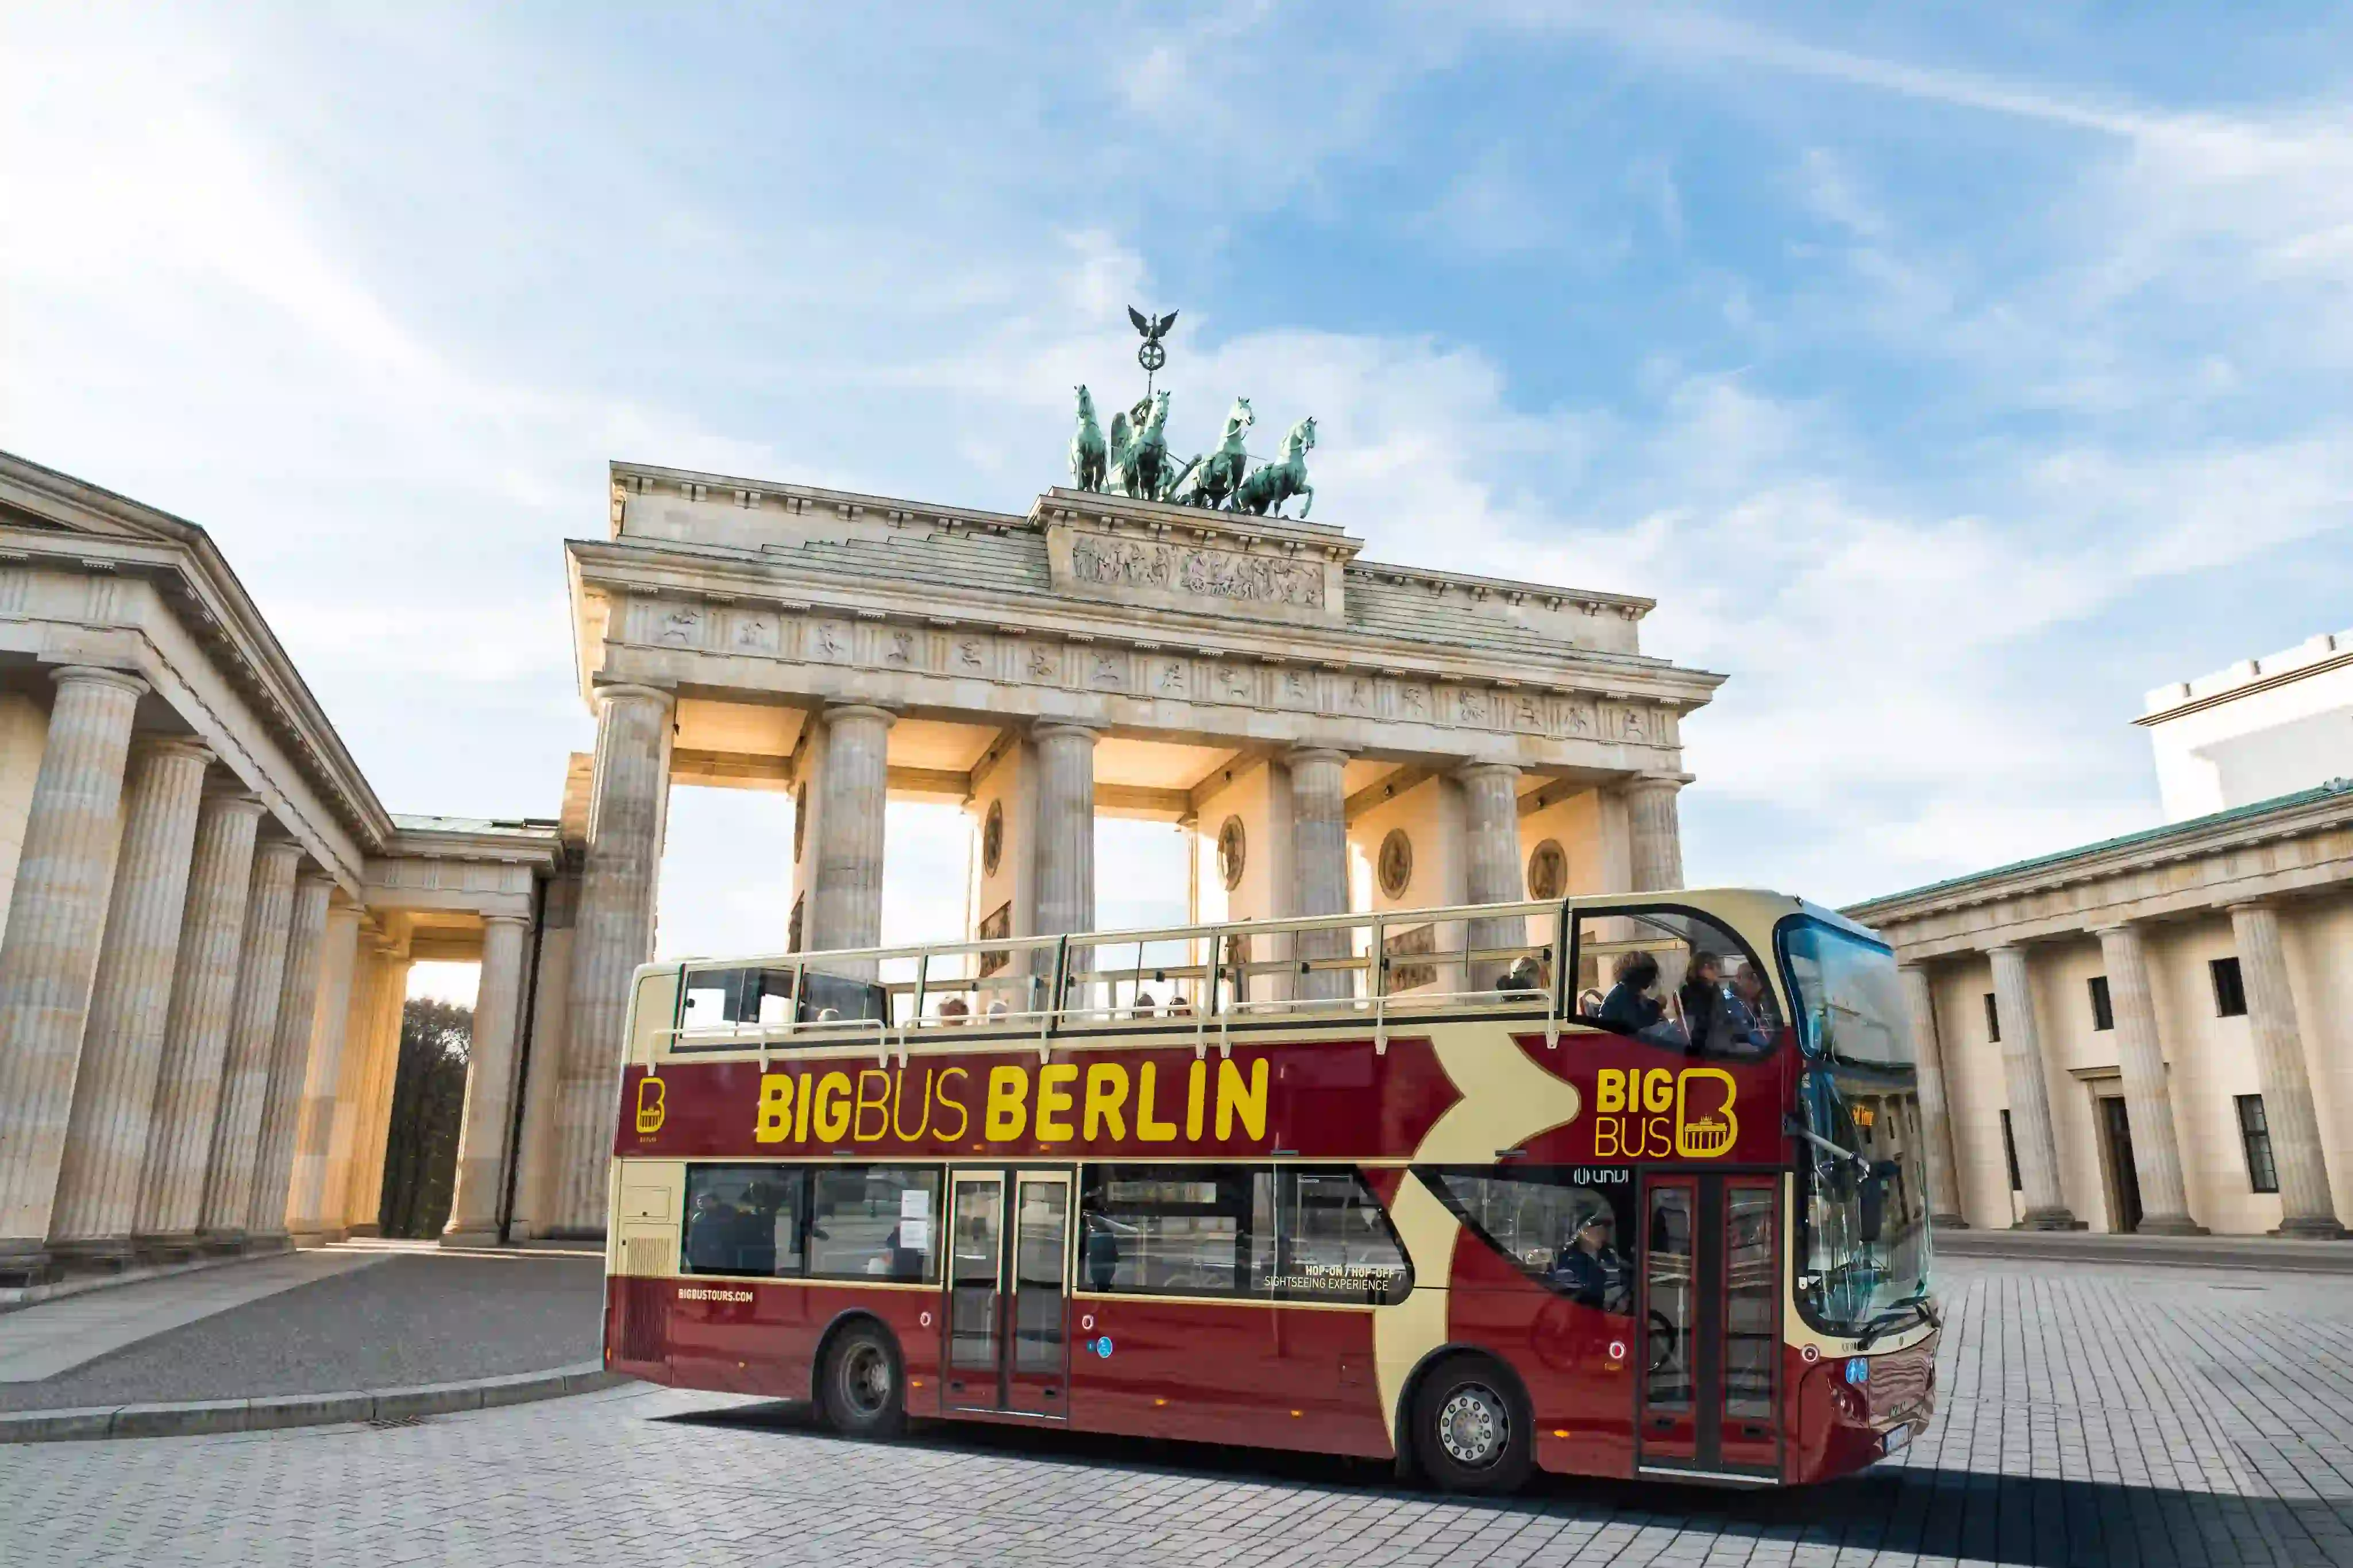 Discover Berlin